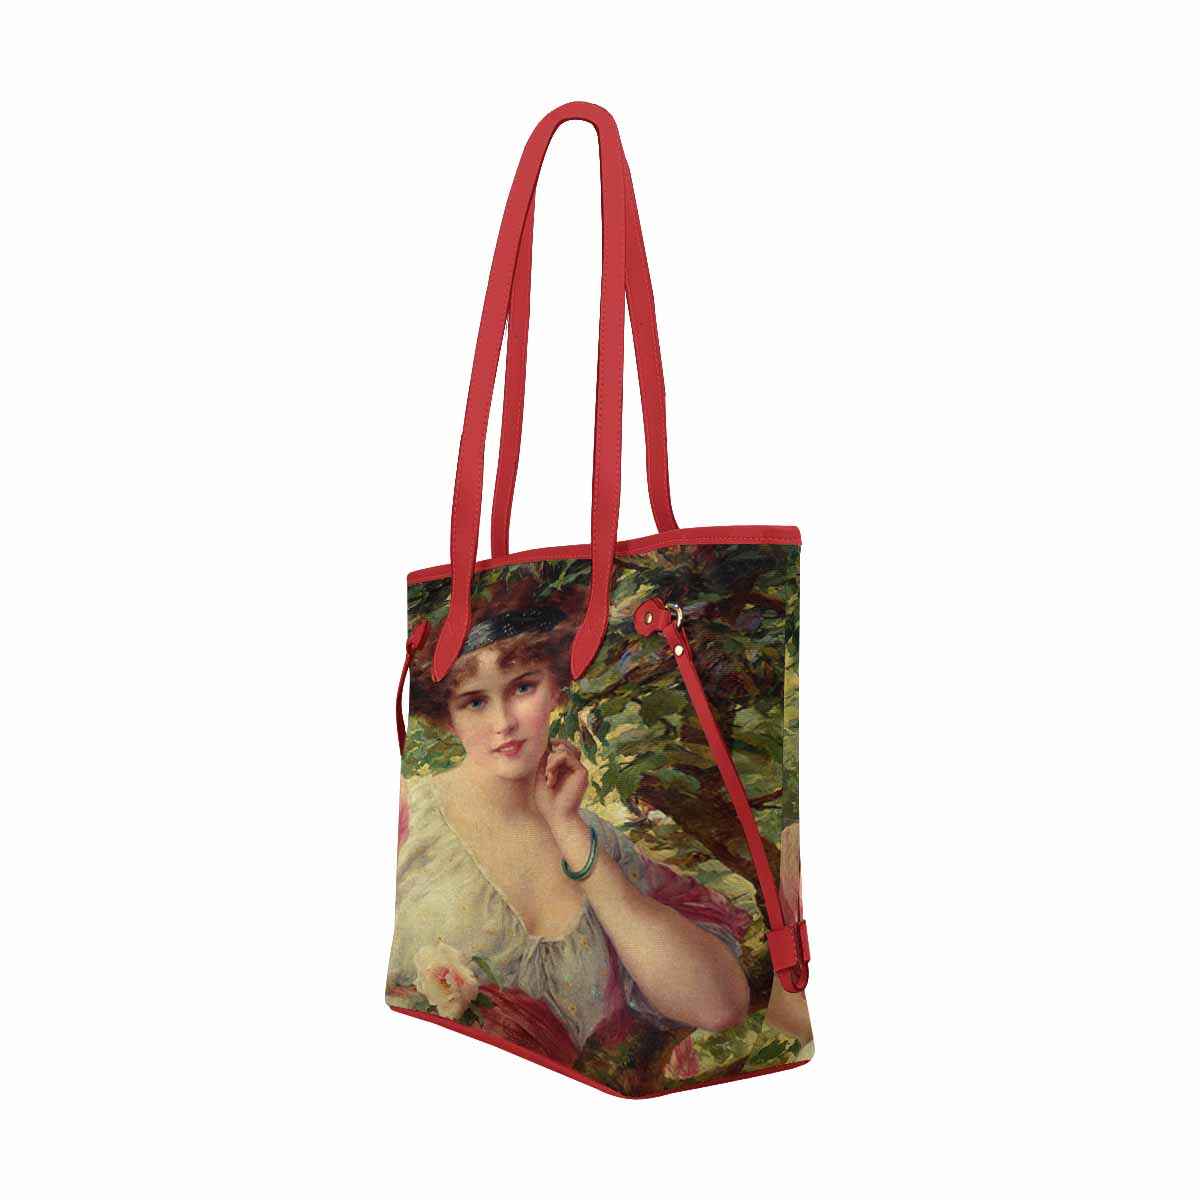 Victorian Lady Design Handbag, Model 1695361, A Summer Rose, RED TRIM